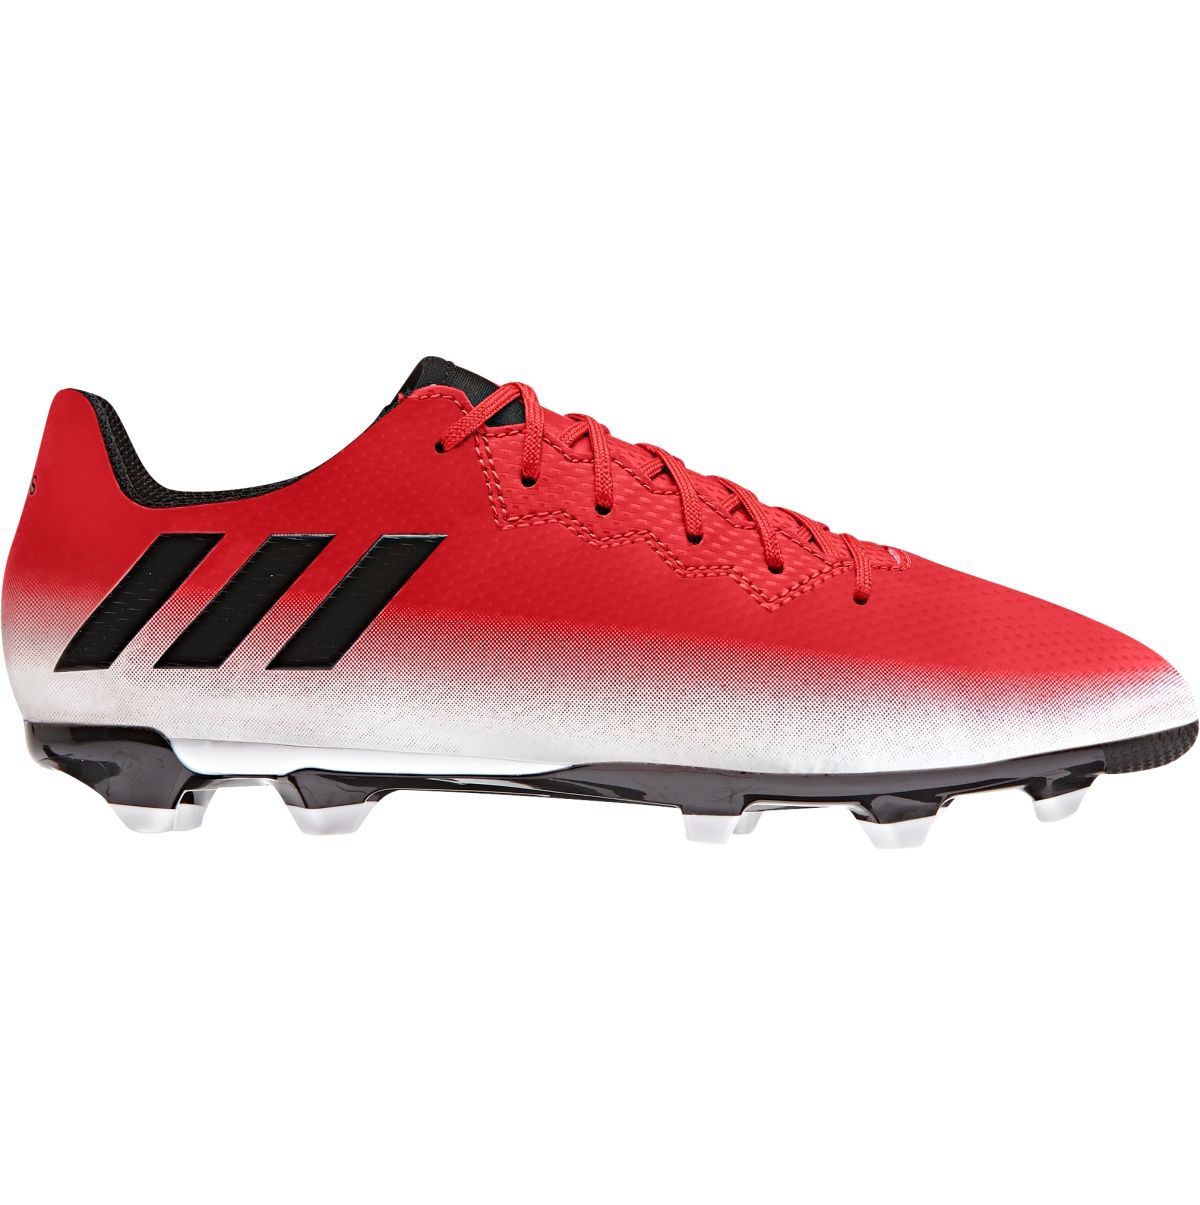 adidas football shoes 16.3